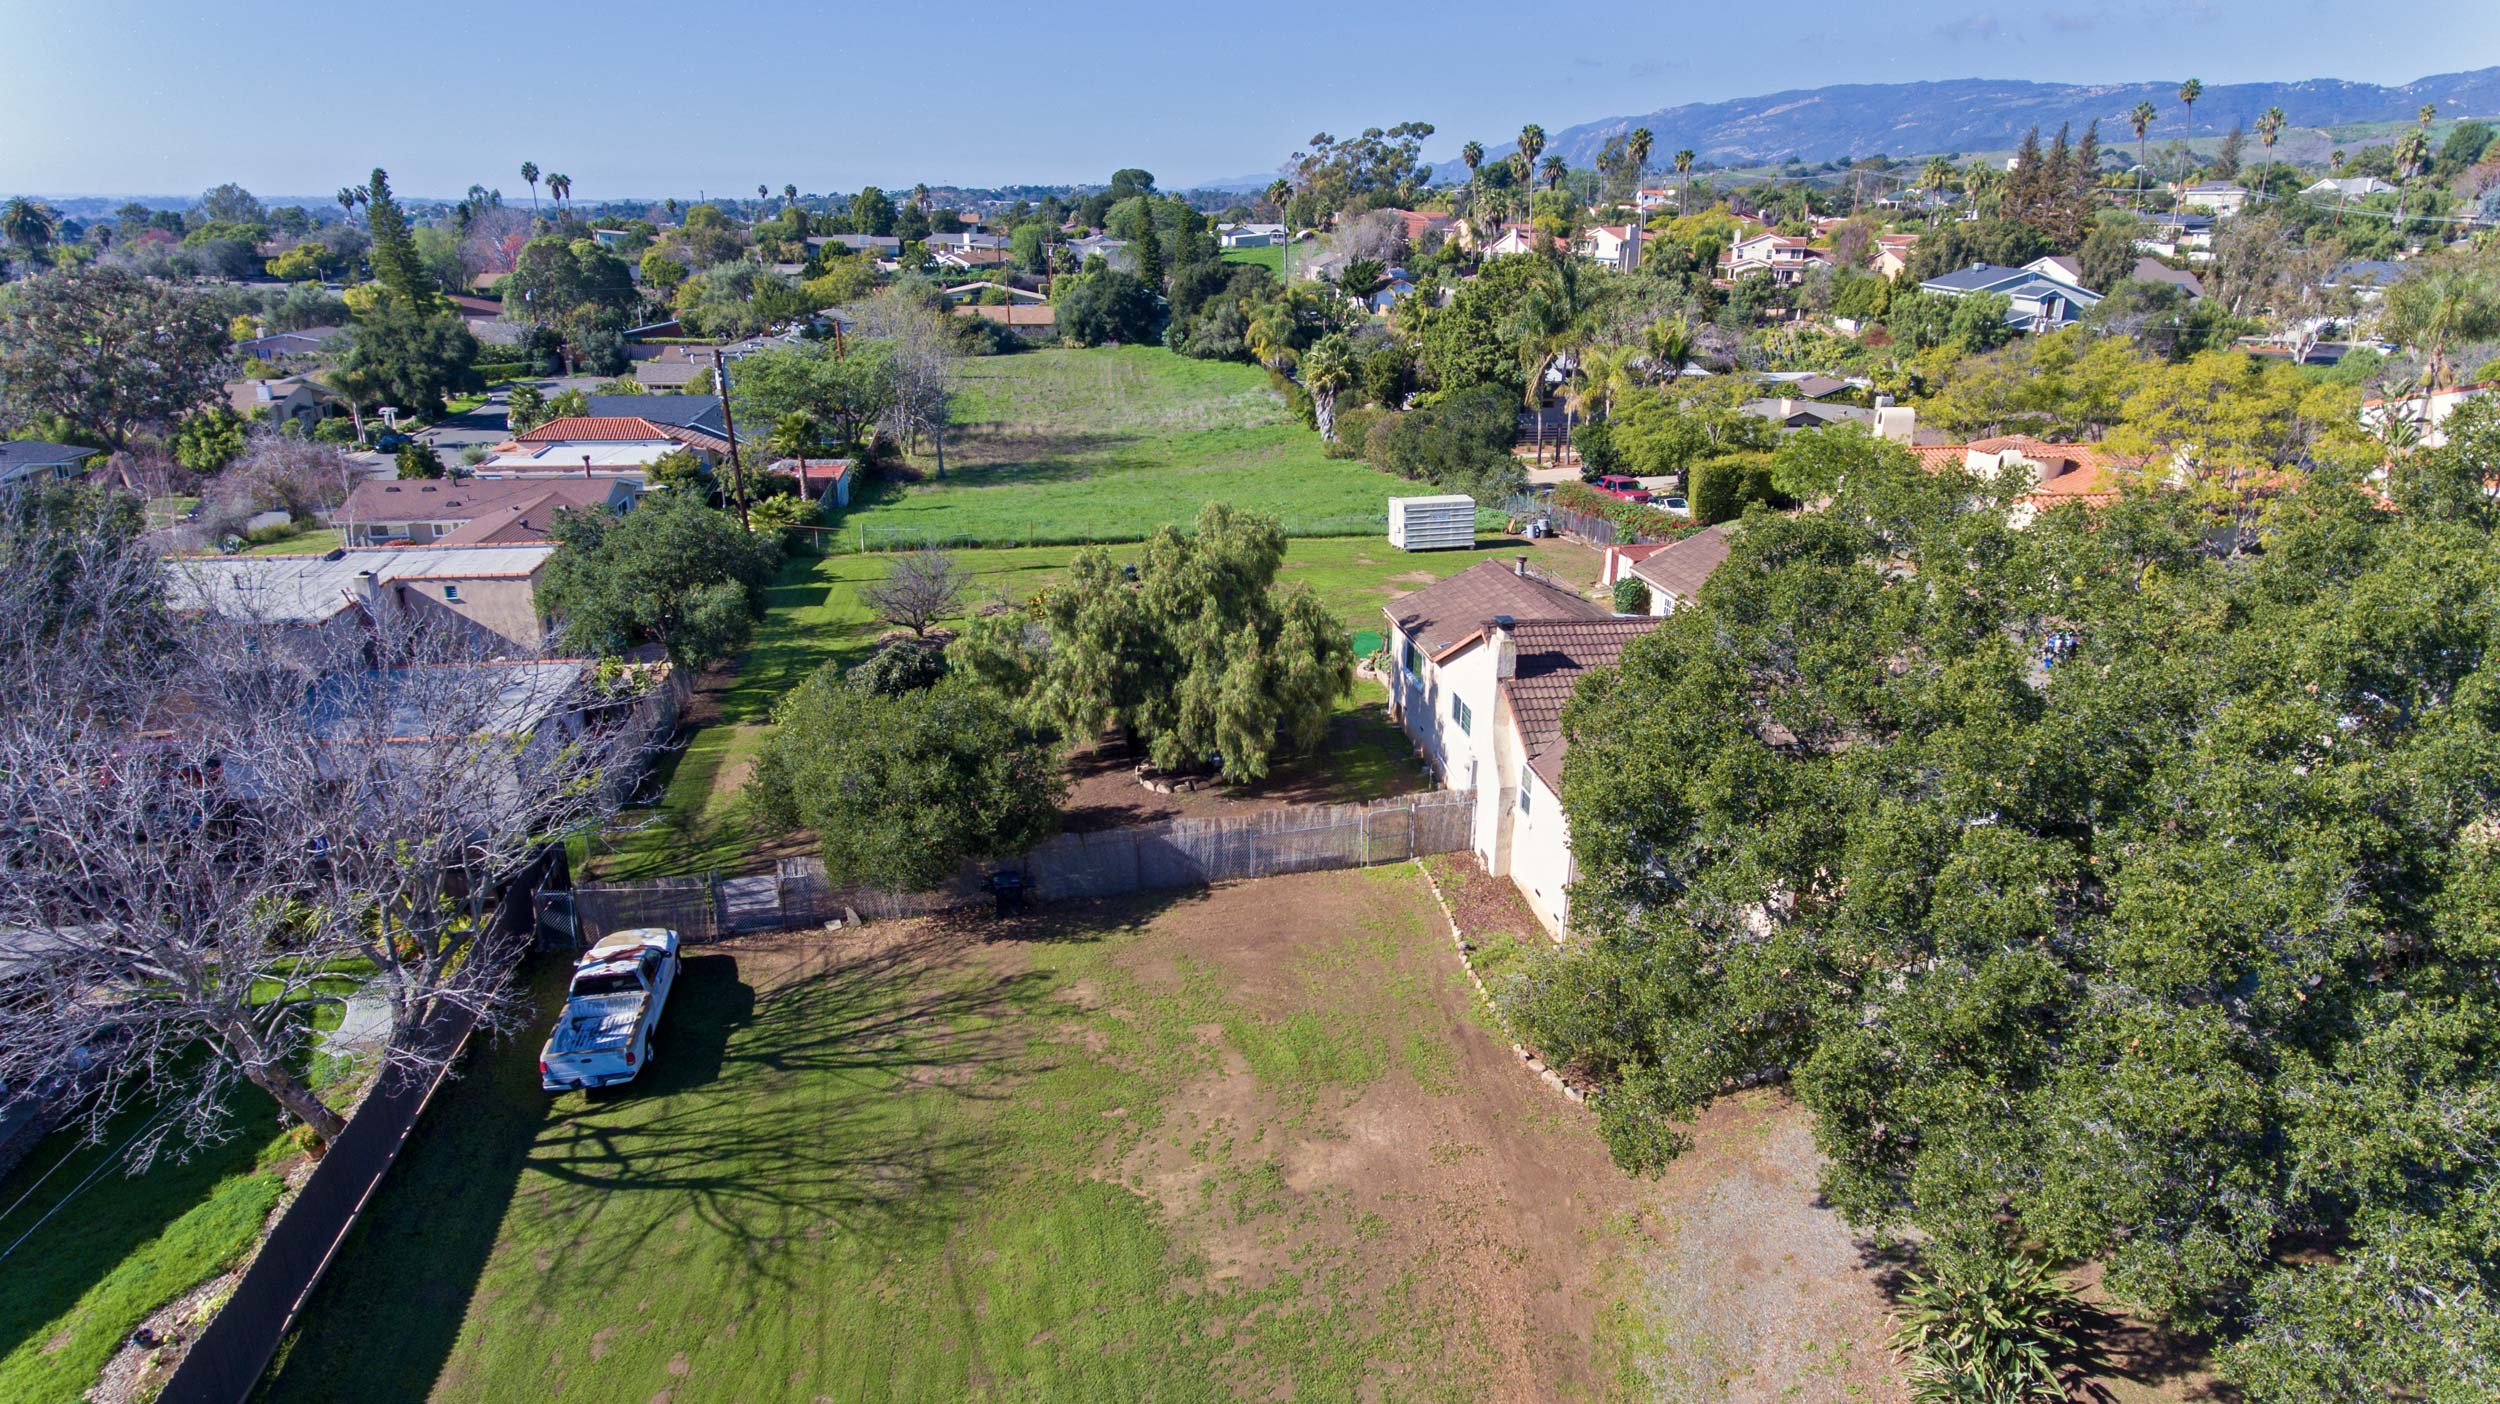 Land Development Oppertunity in Santa Barbara California